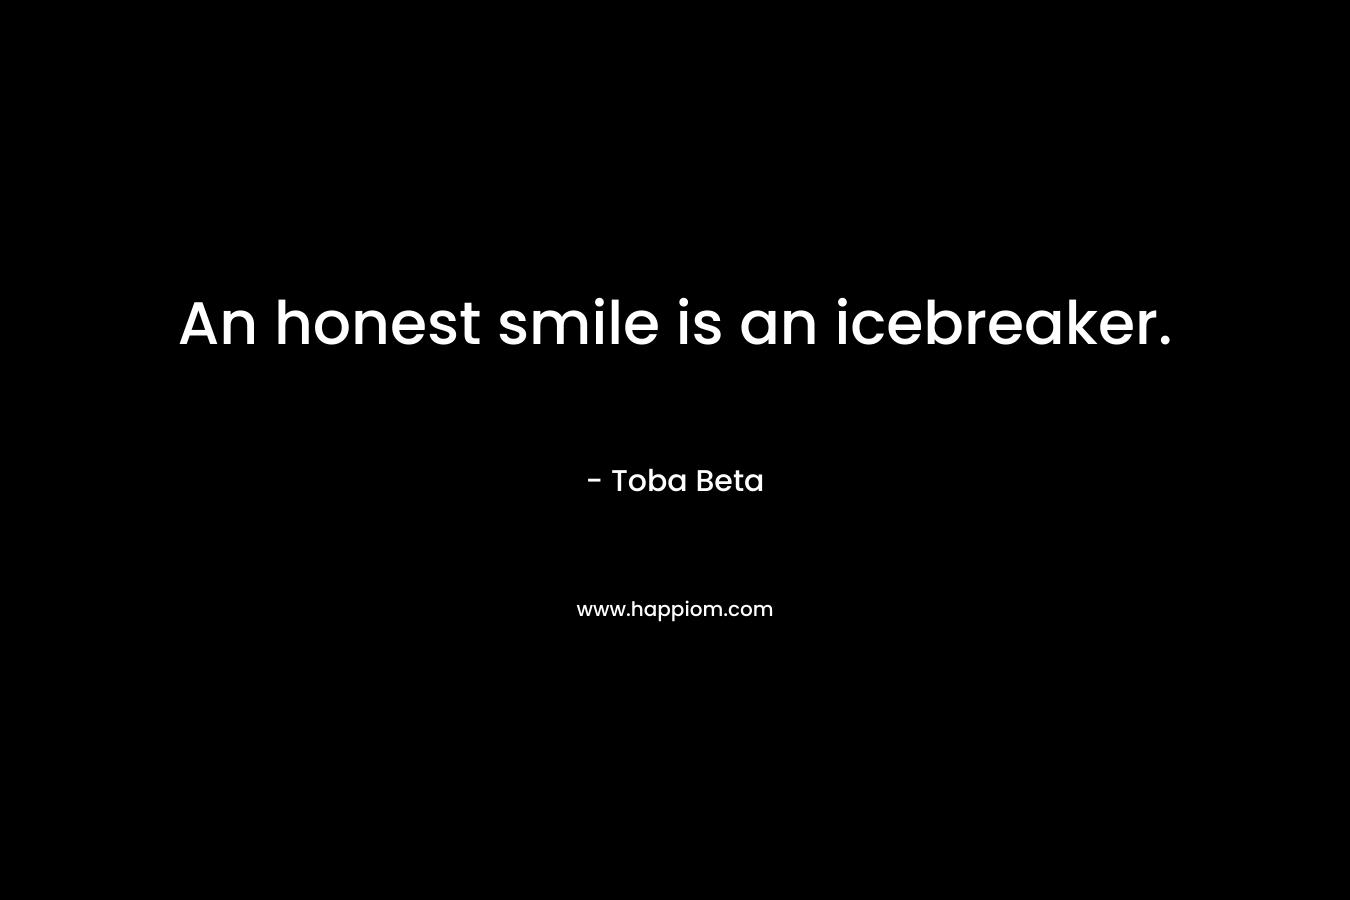 An honest smile is an icebreaker.